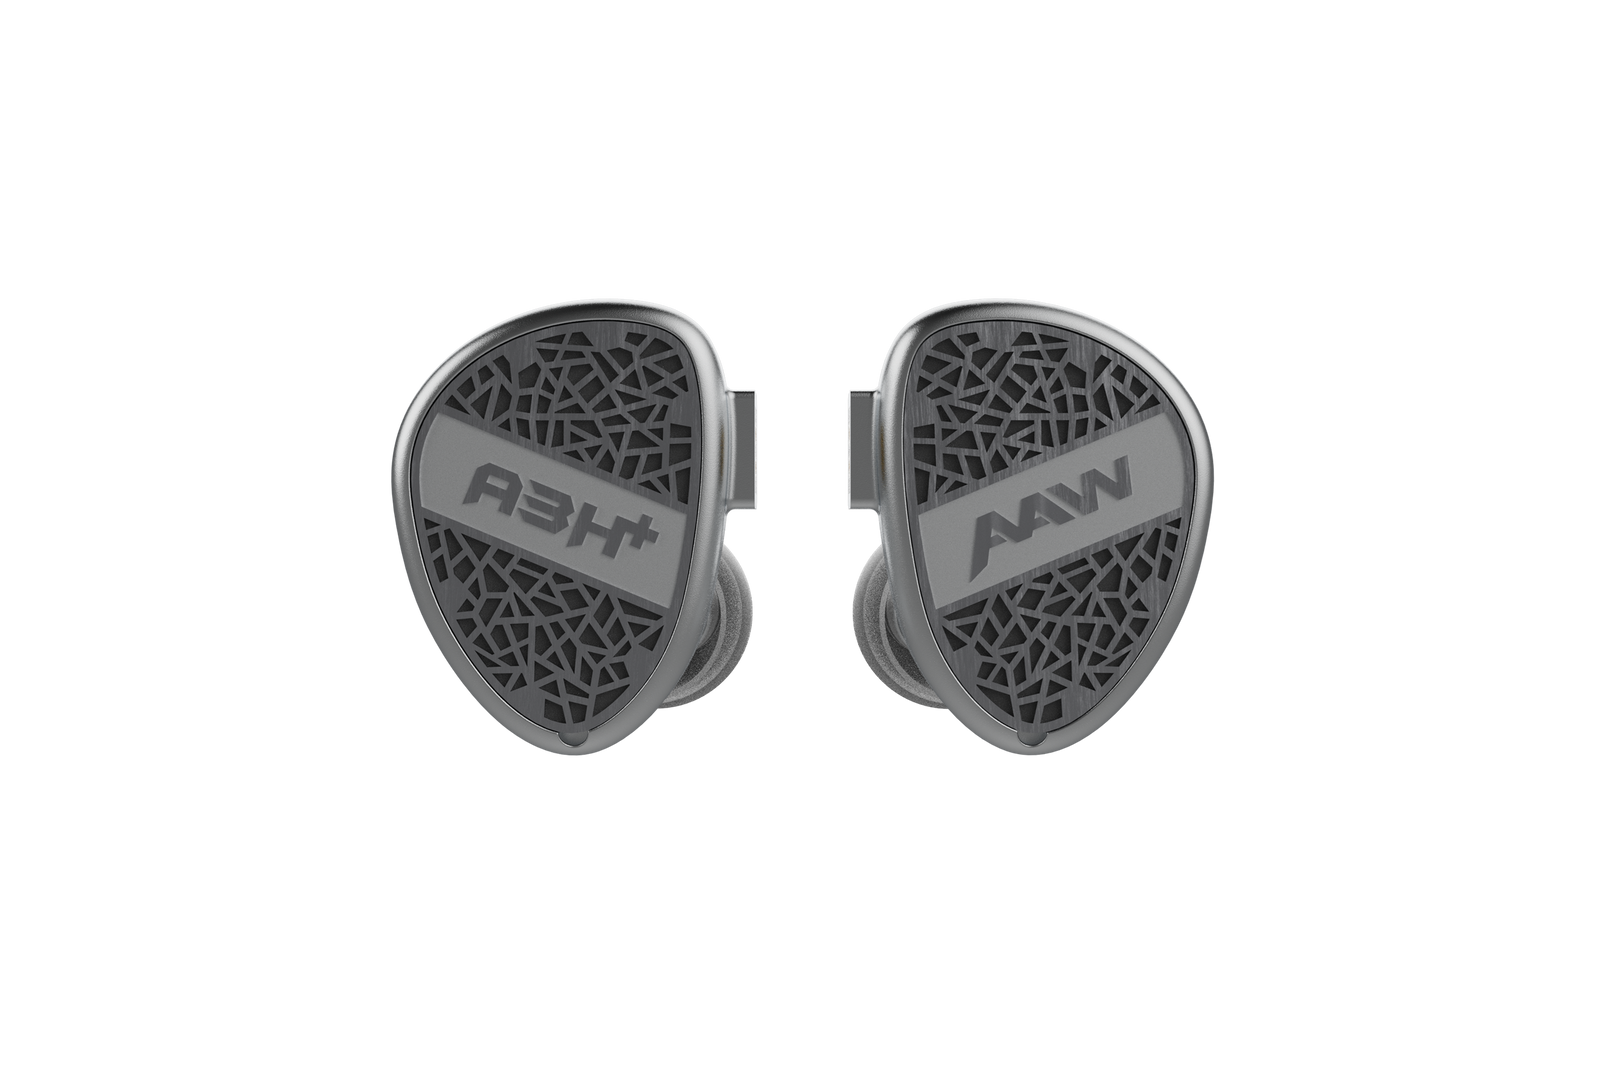 Kingfisher Ceramic Gaming Universal In-Ear Monitor– Null Audio